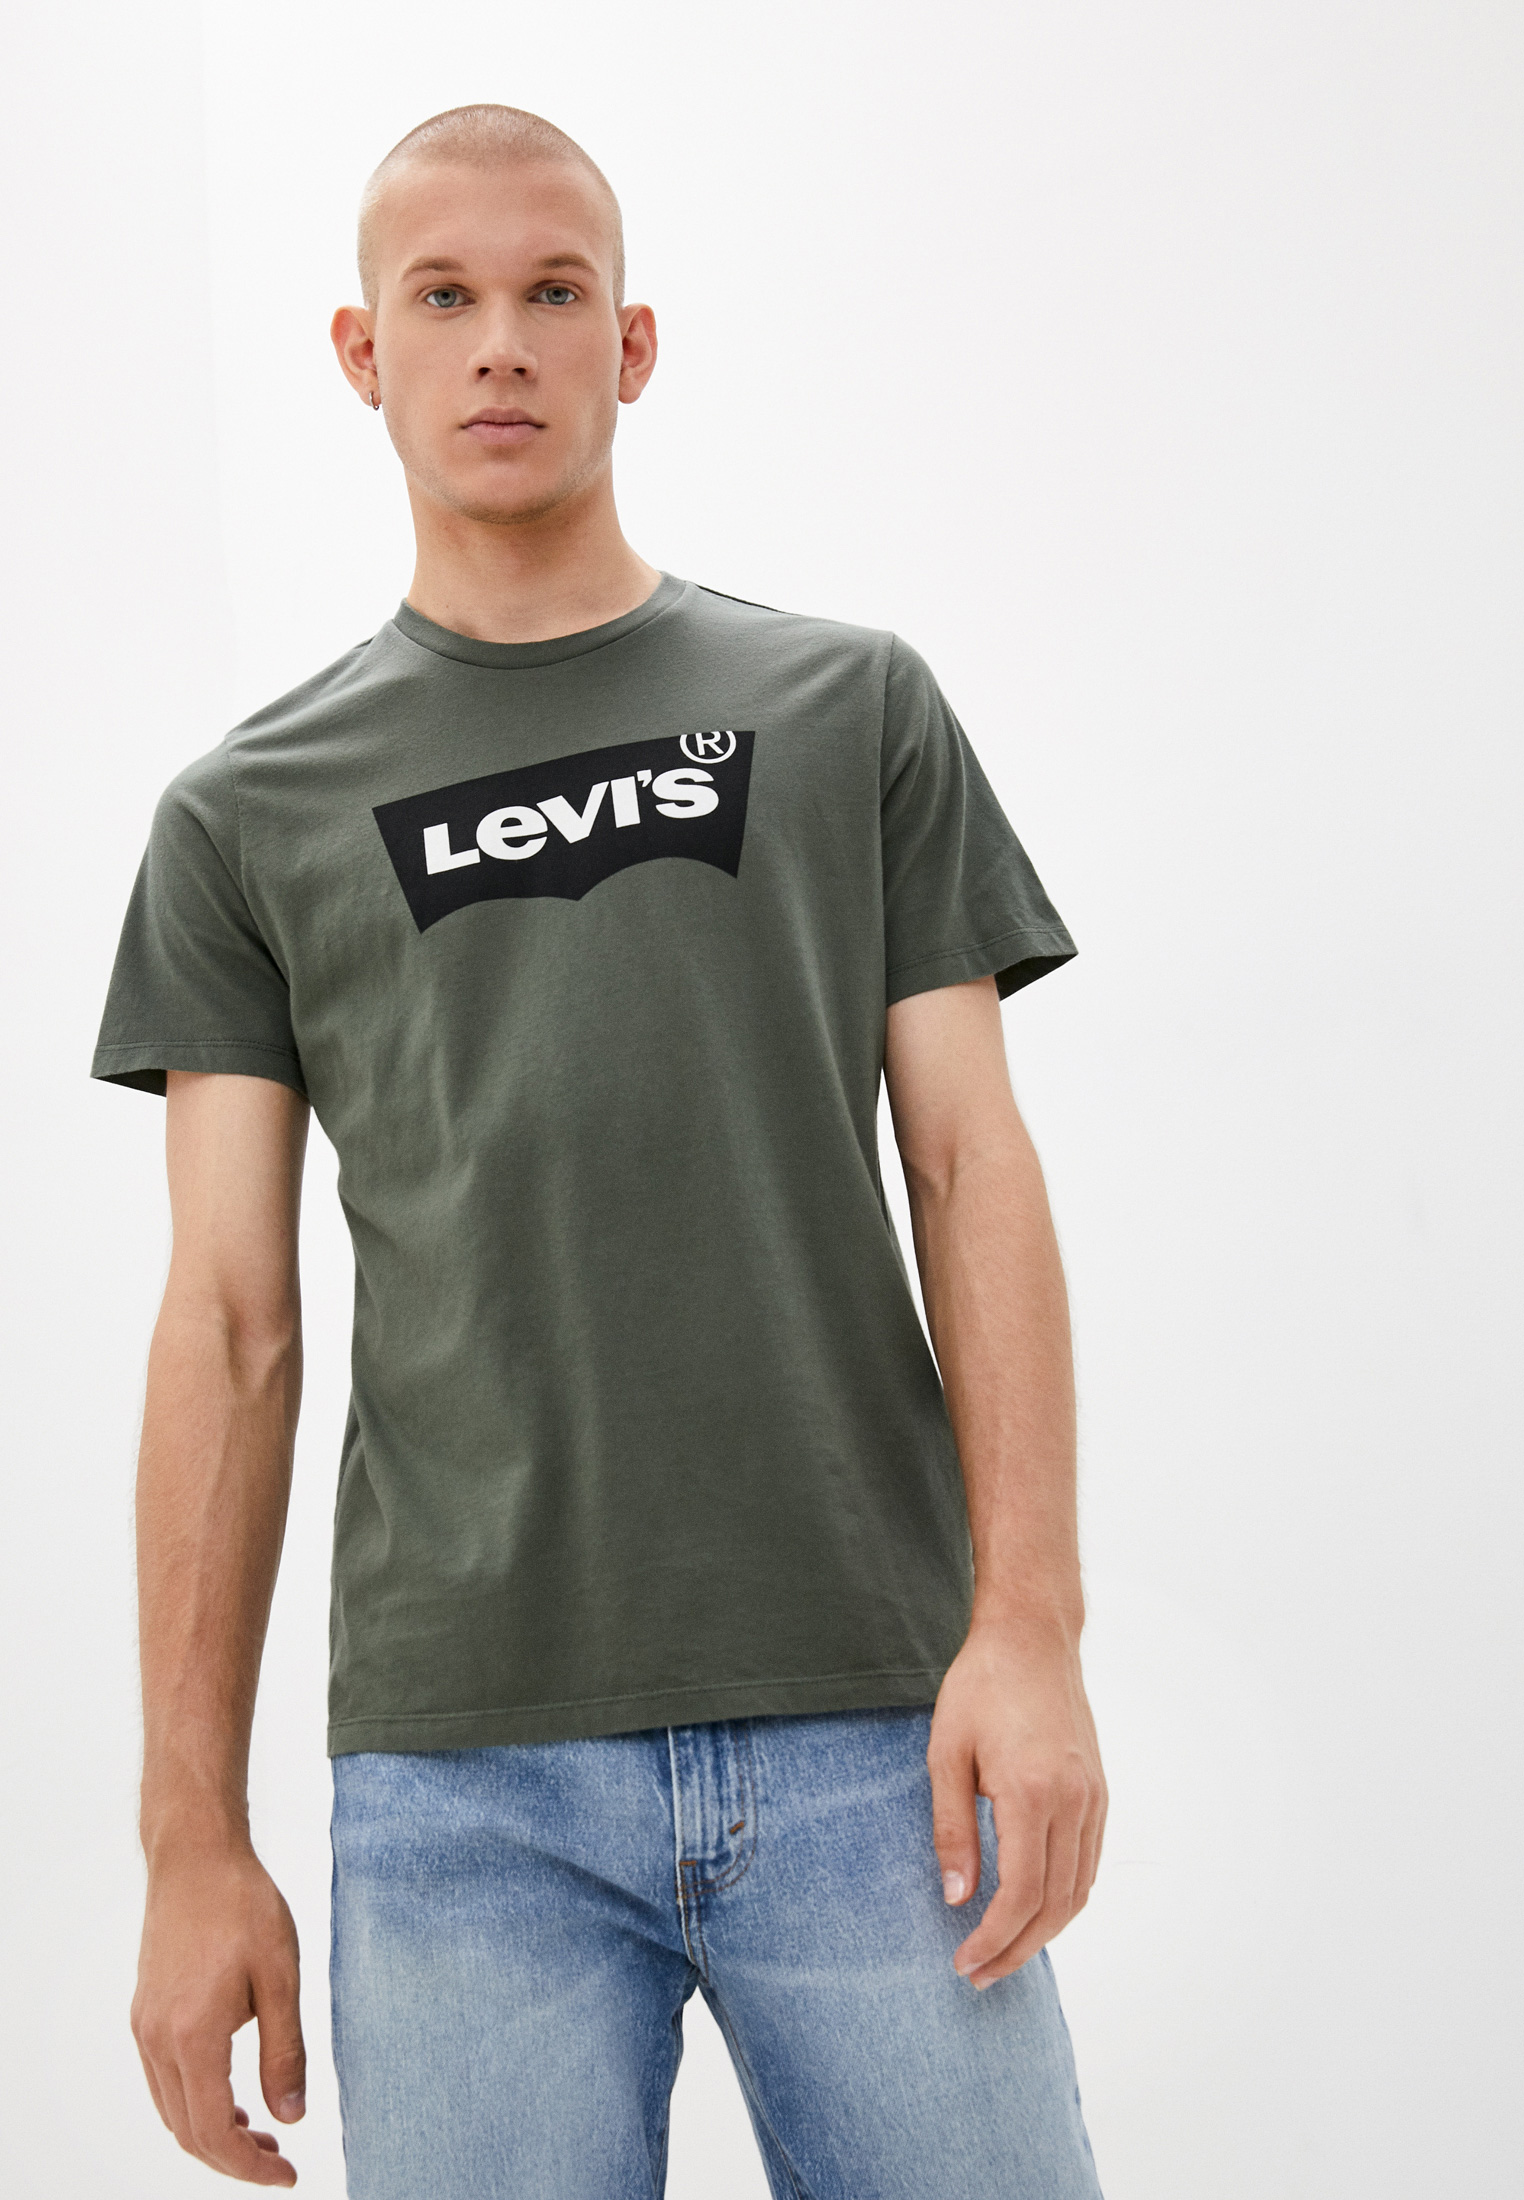 Levis T Shirt Noir Discounted Shoponline, 40% OFF | evanstoncinci.org